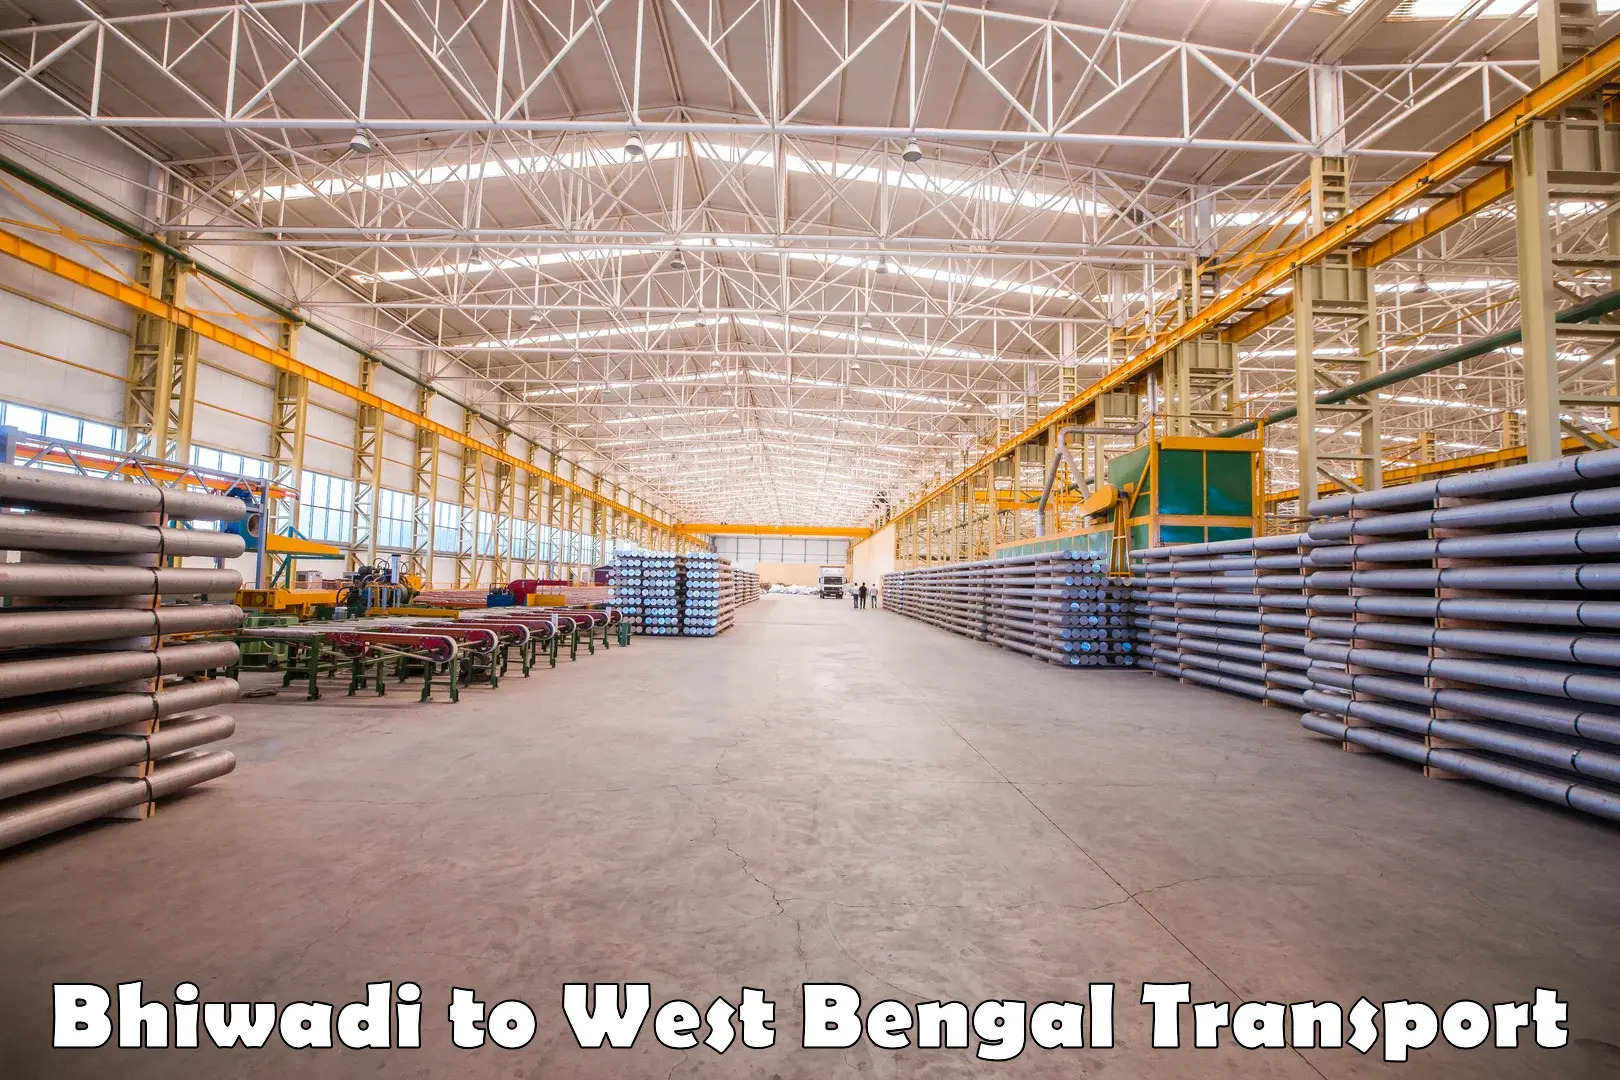 Truck transport companies in India Bhiwadi to Egra